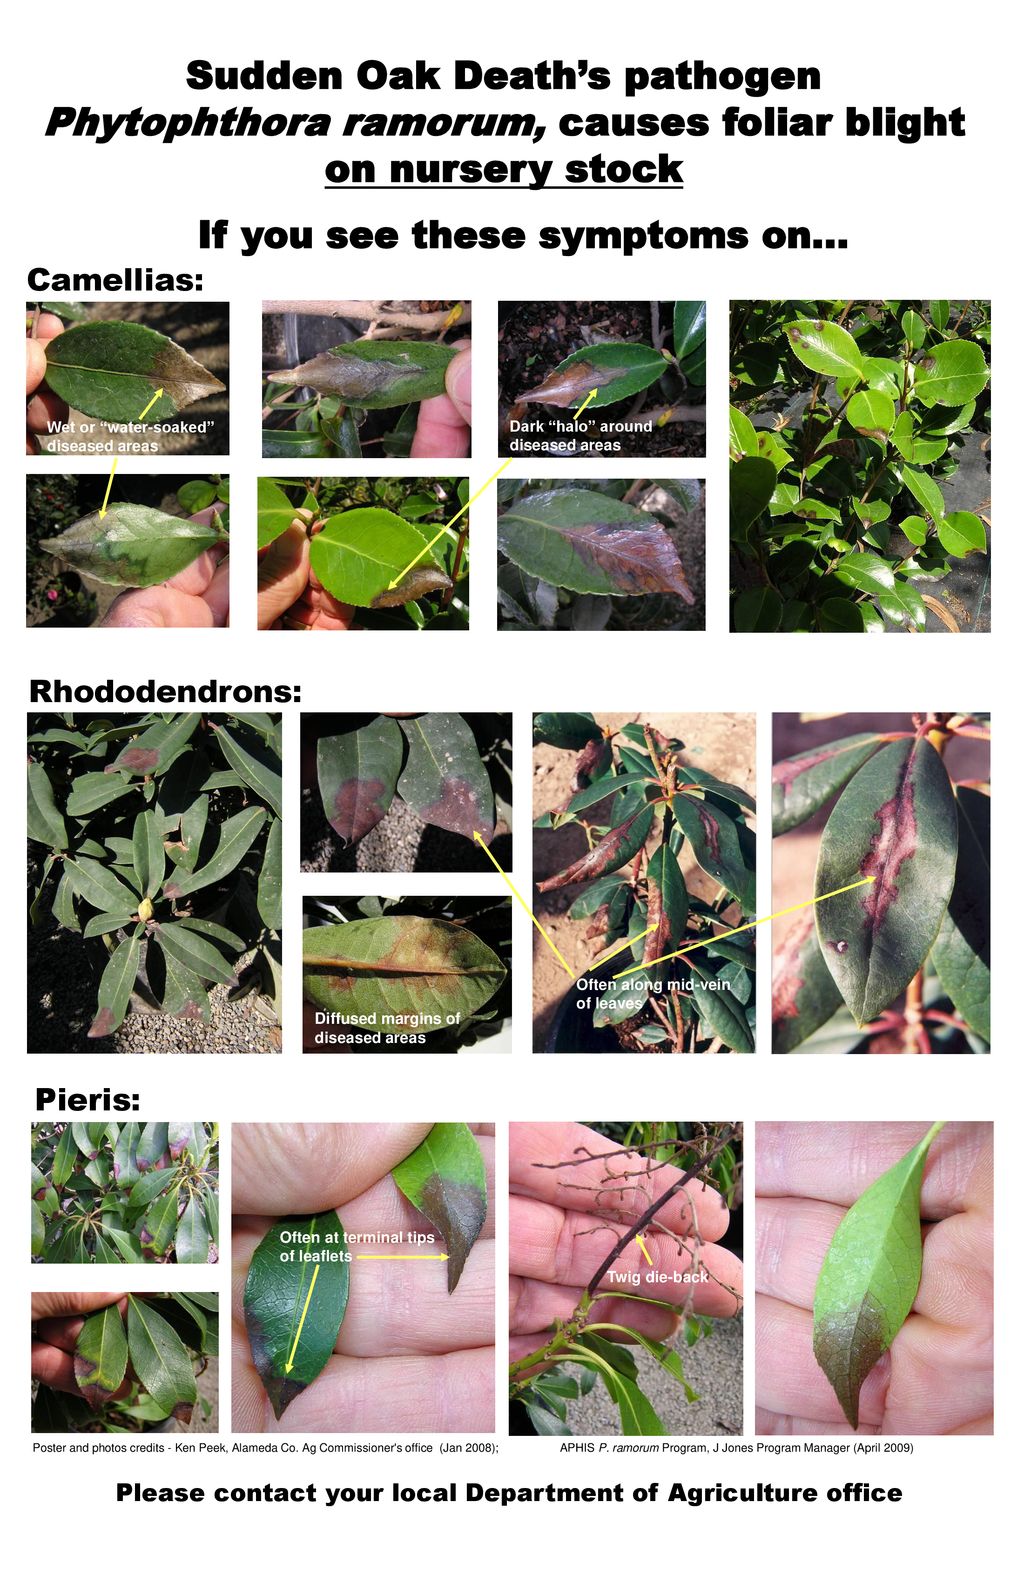 Sudden Oak Death’s pathogen Phytophthora ramorum, causes foliar blight